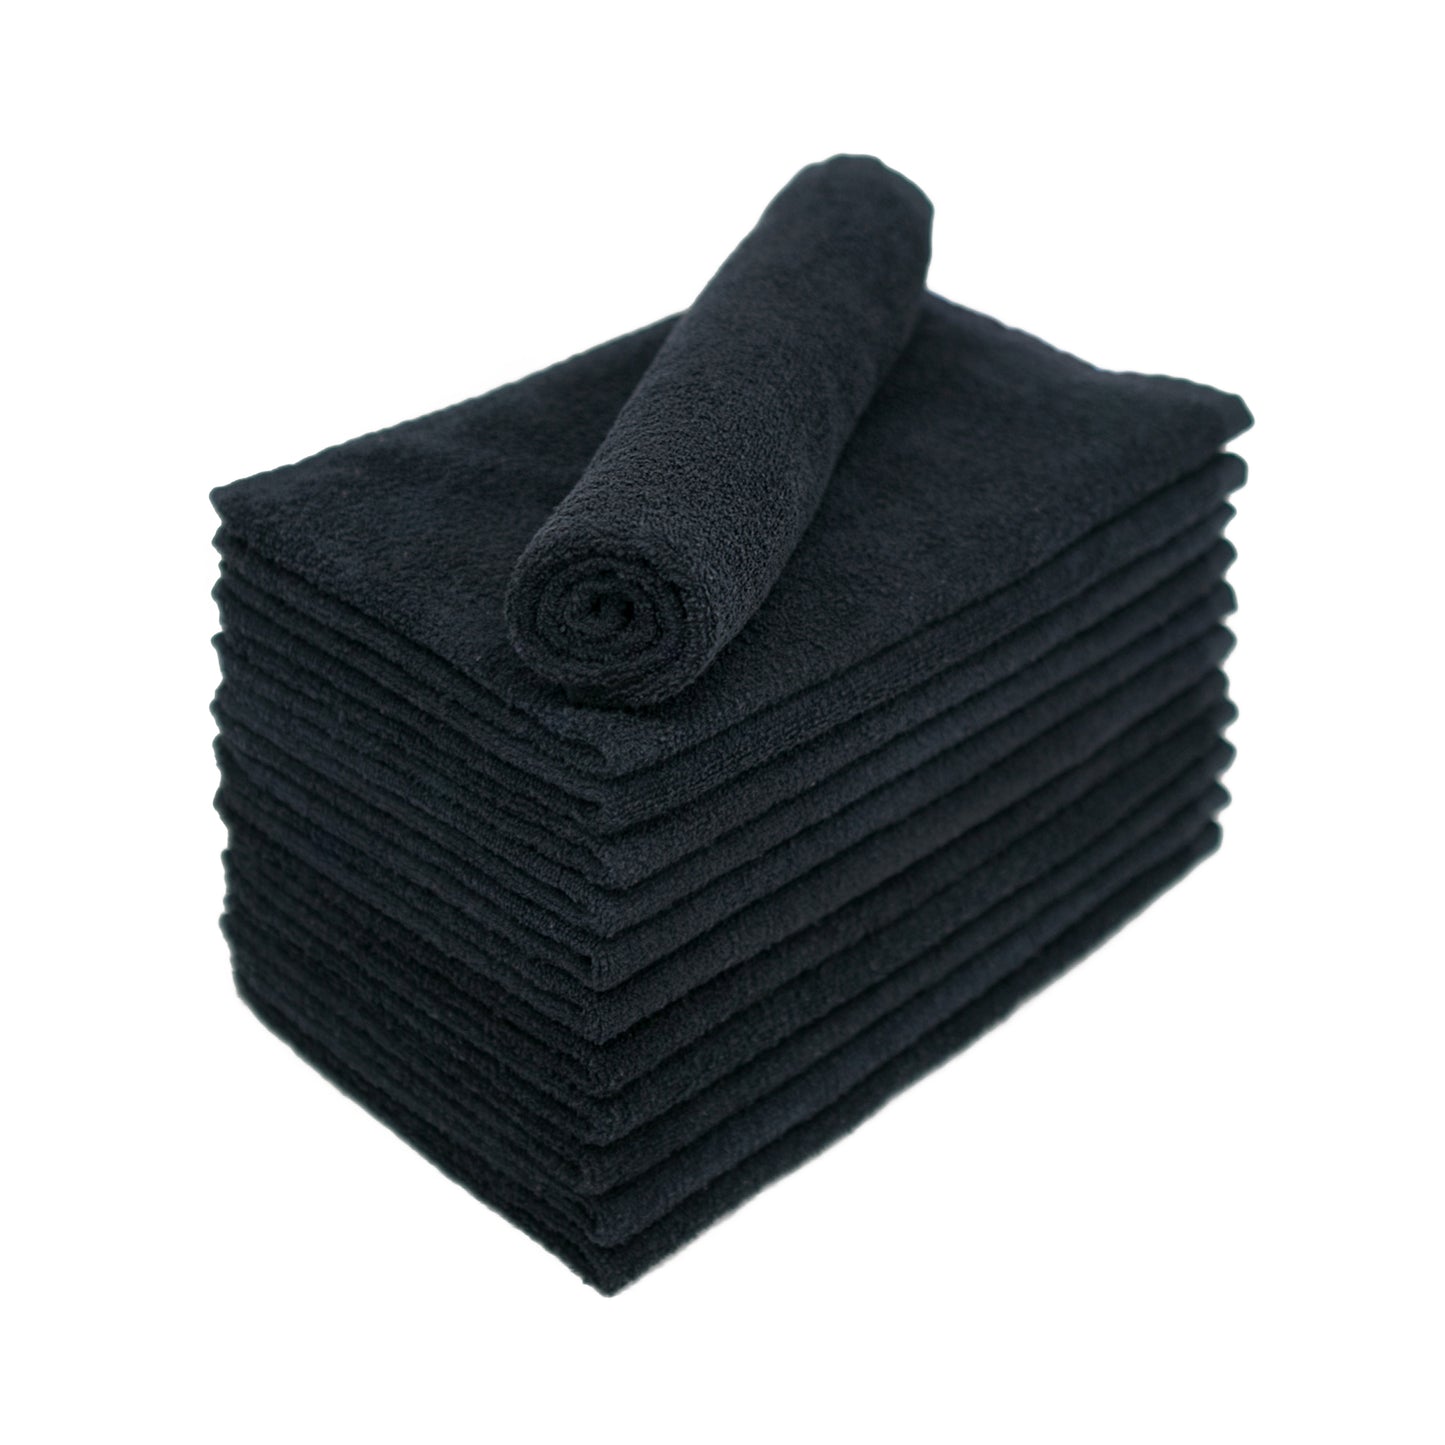 Black Bleach Proof Towels 16" x 28" 